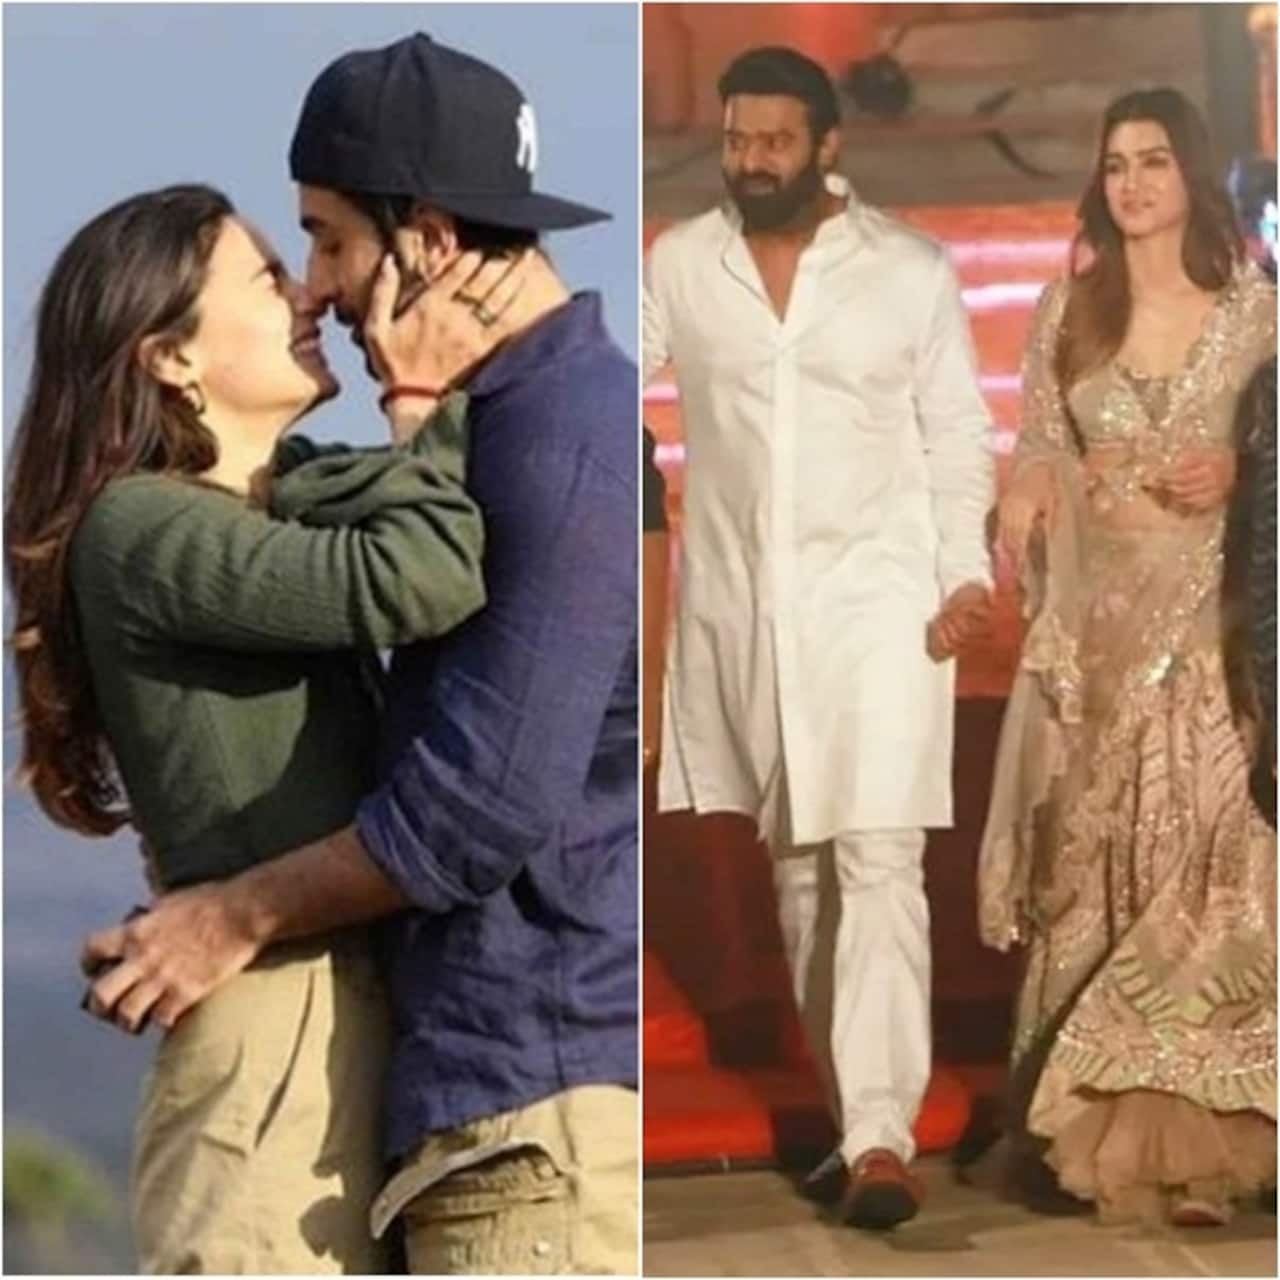 Latest entertainment news: Alia Bhatt, Ranbir Kapoor planning to reveal daughter Raha's face; Varun Dhawan hints at Kriti Sanon-Prabhas relationship and more